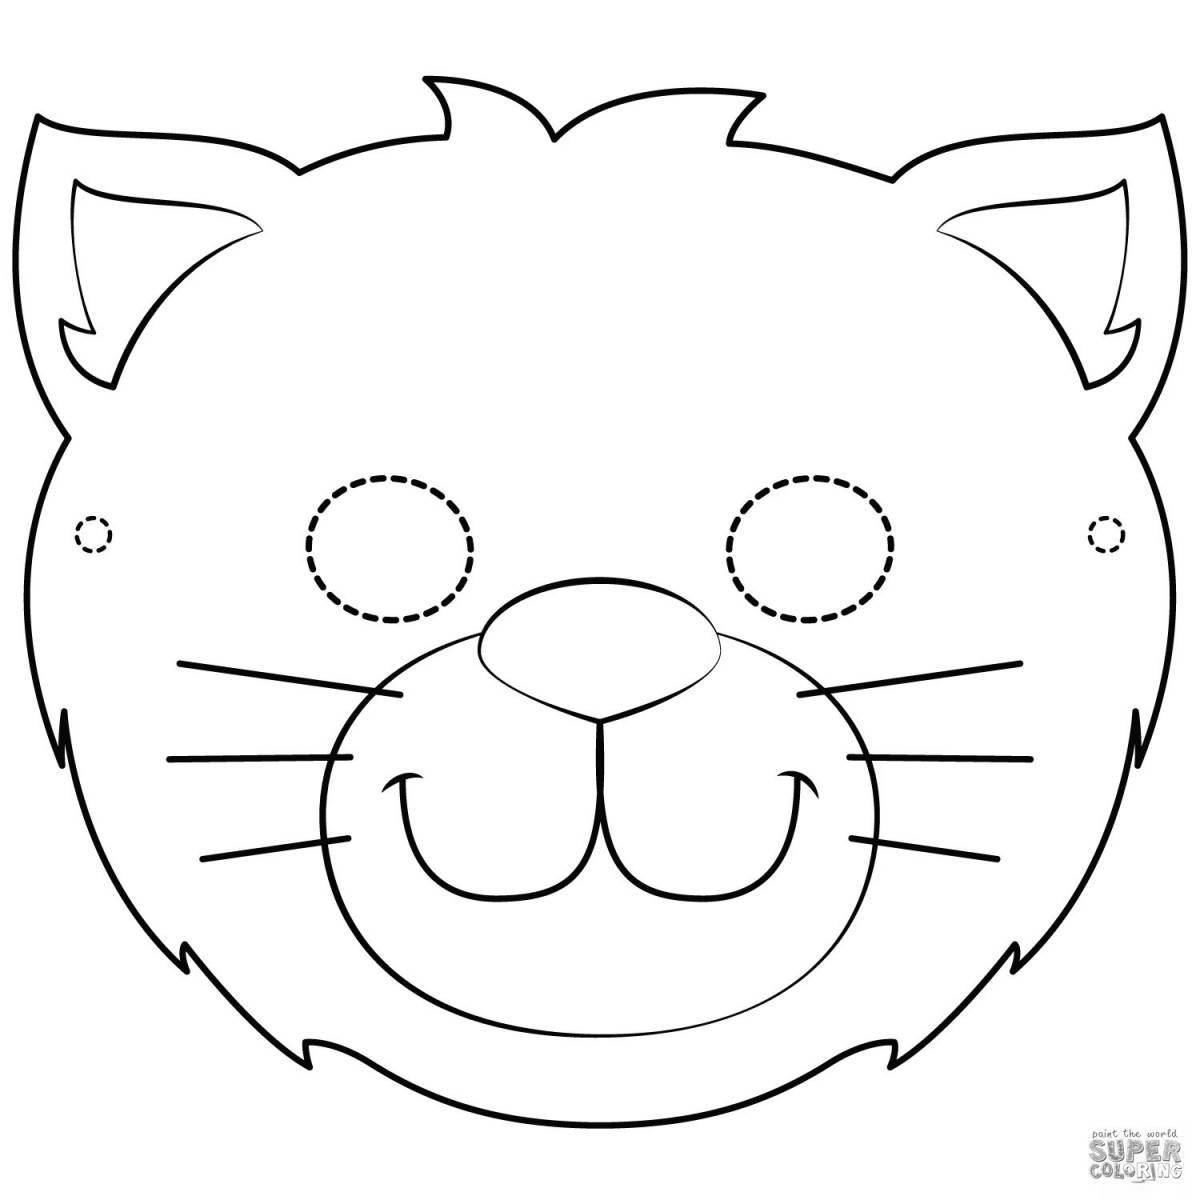 Раскраска кавайная мордашка котенка